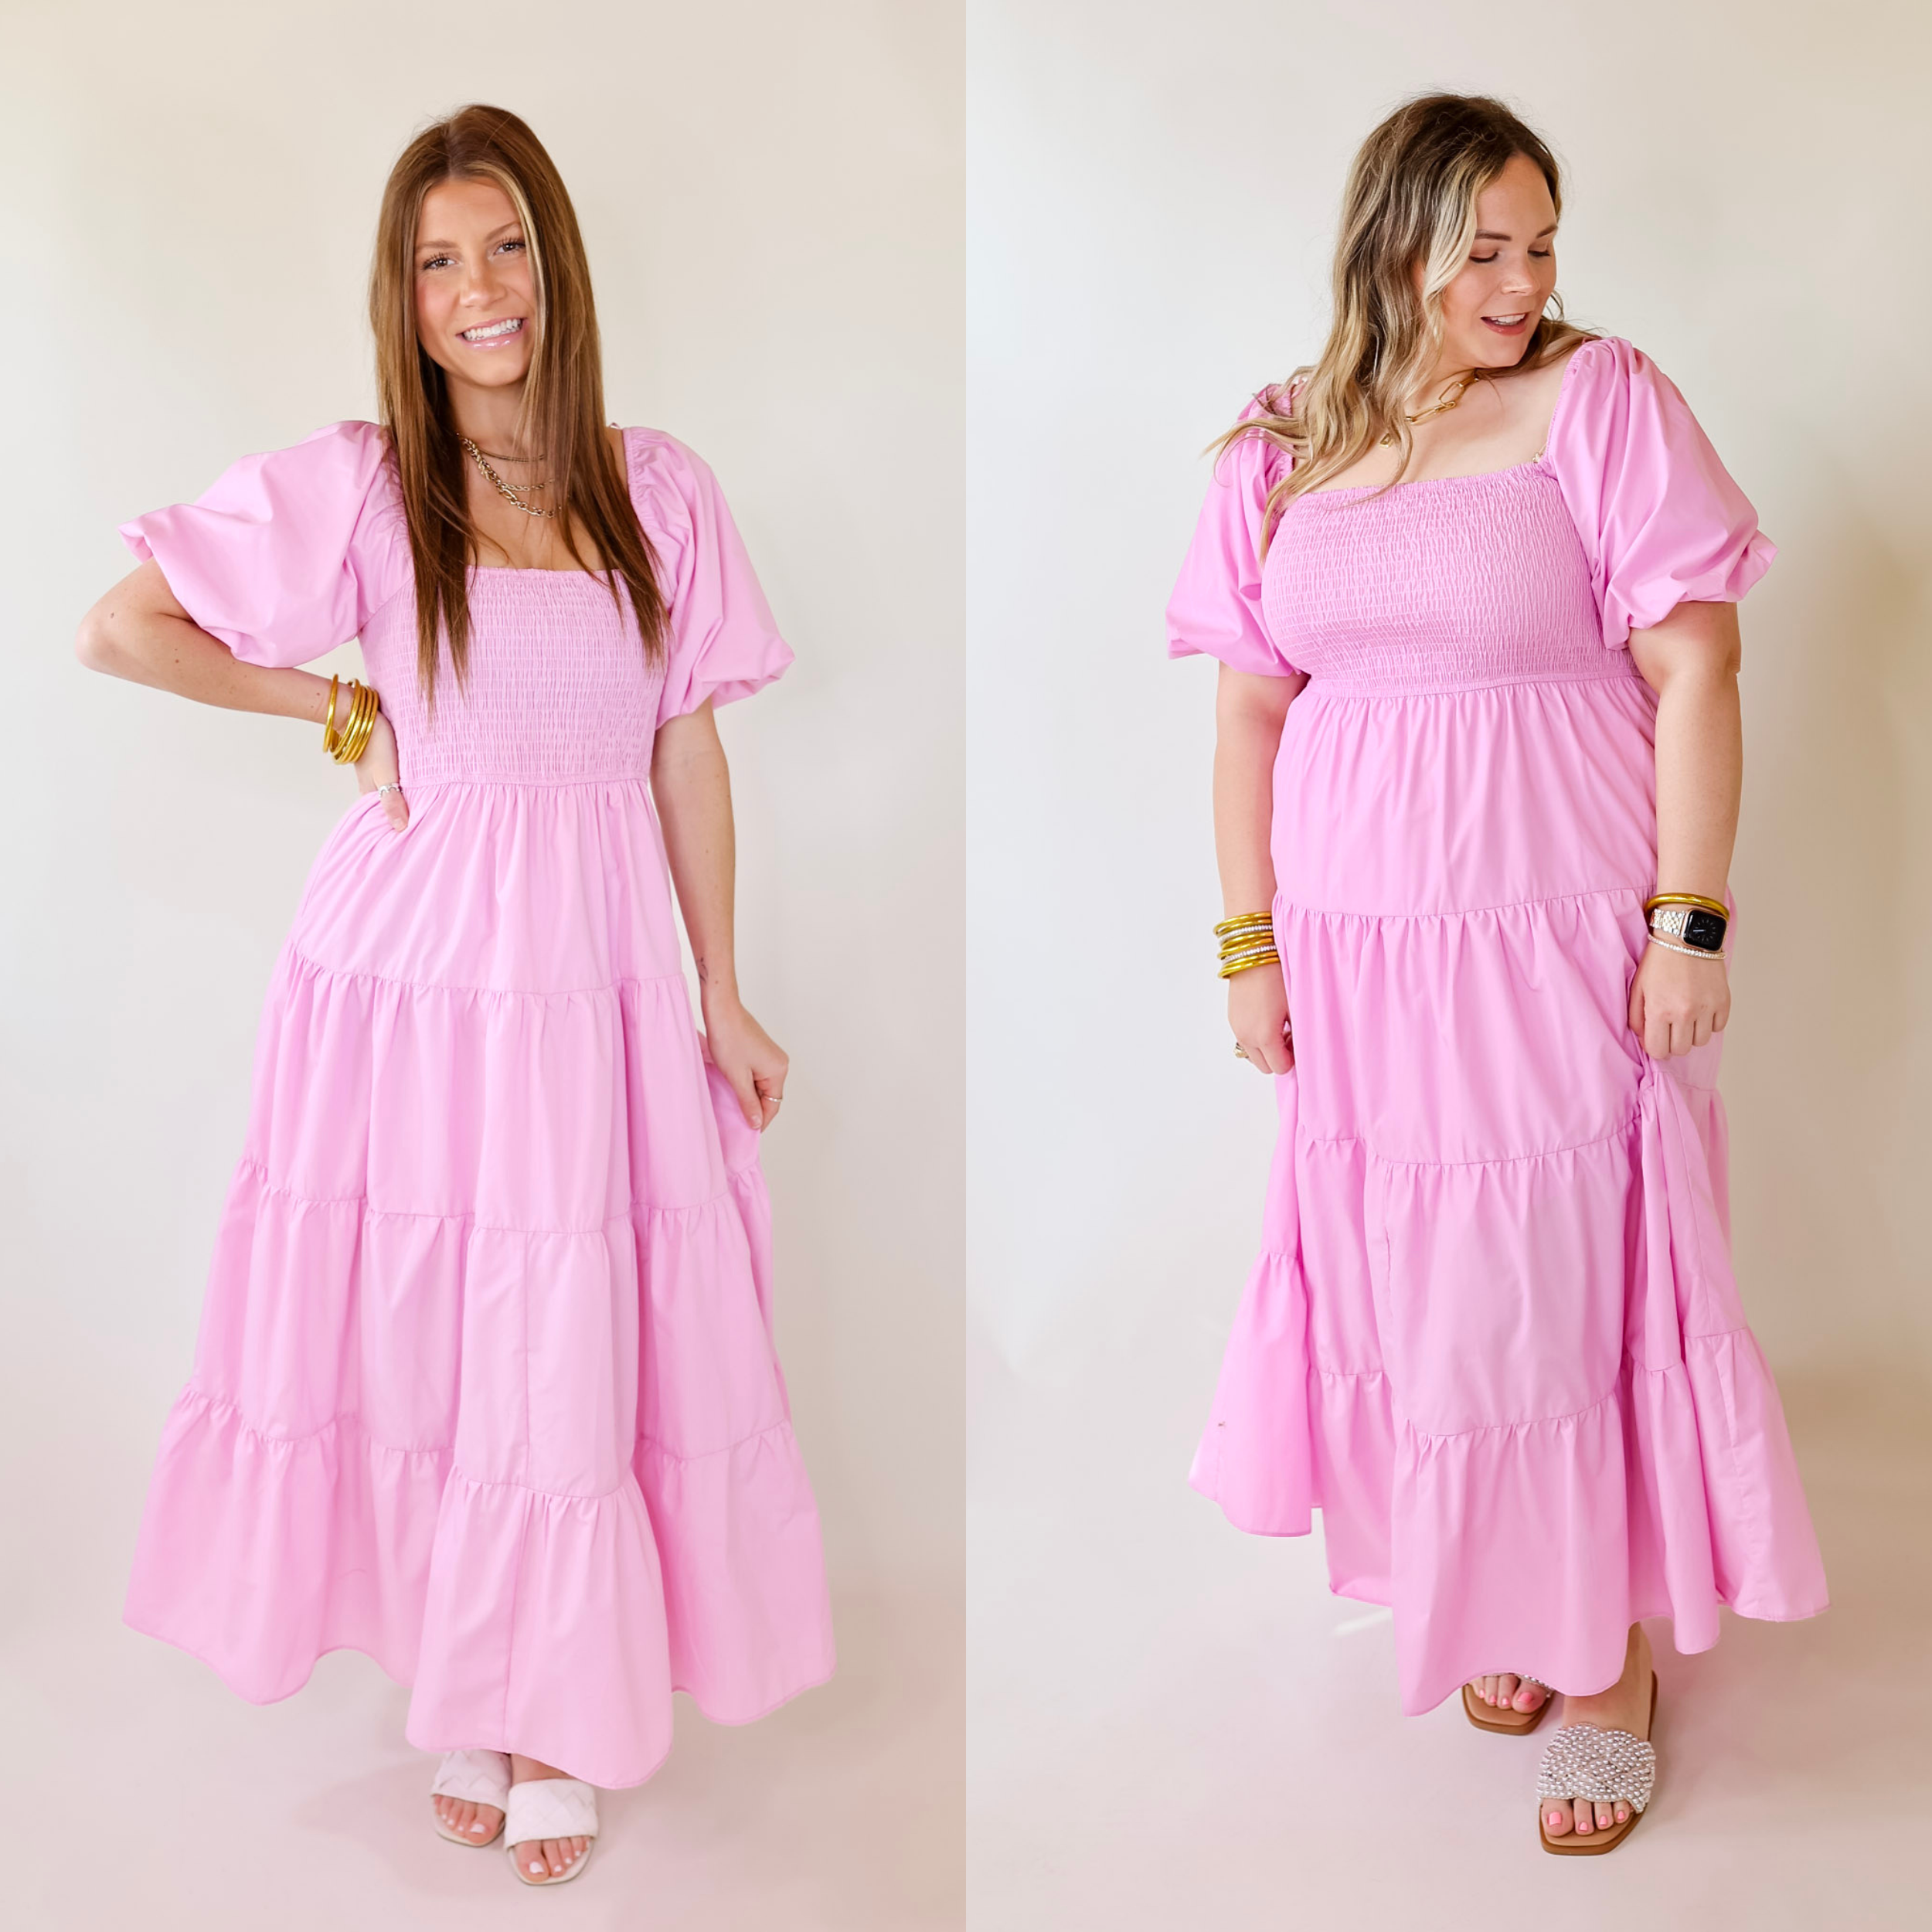 Santorini Sunshine Short Balloon Sleeve Maxi Dress in Light Pink - Giddy Up Glamour Boutique